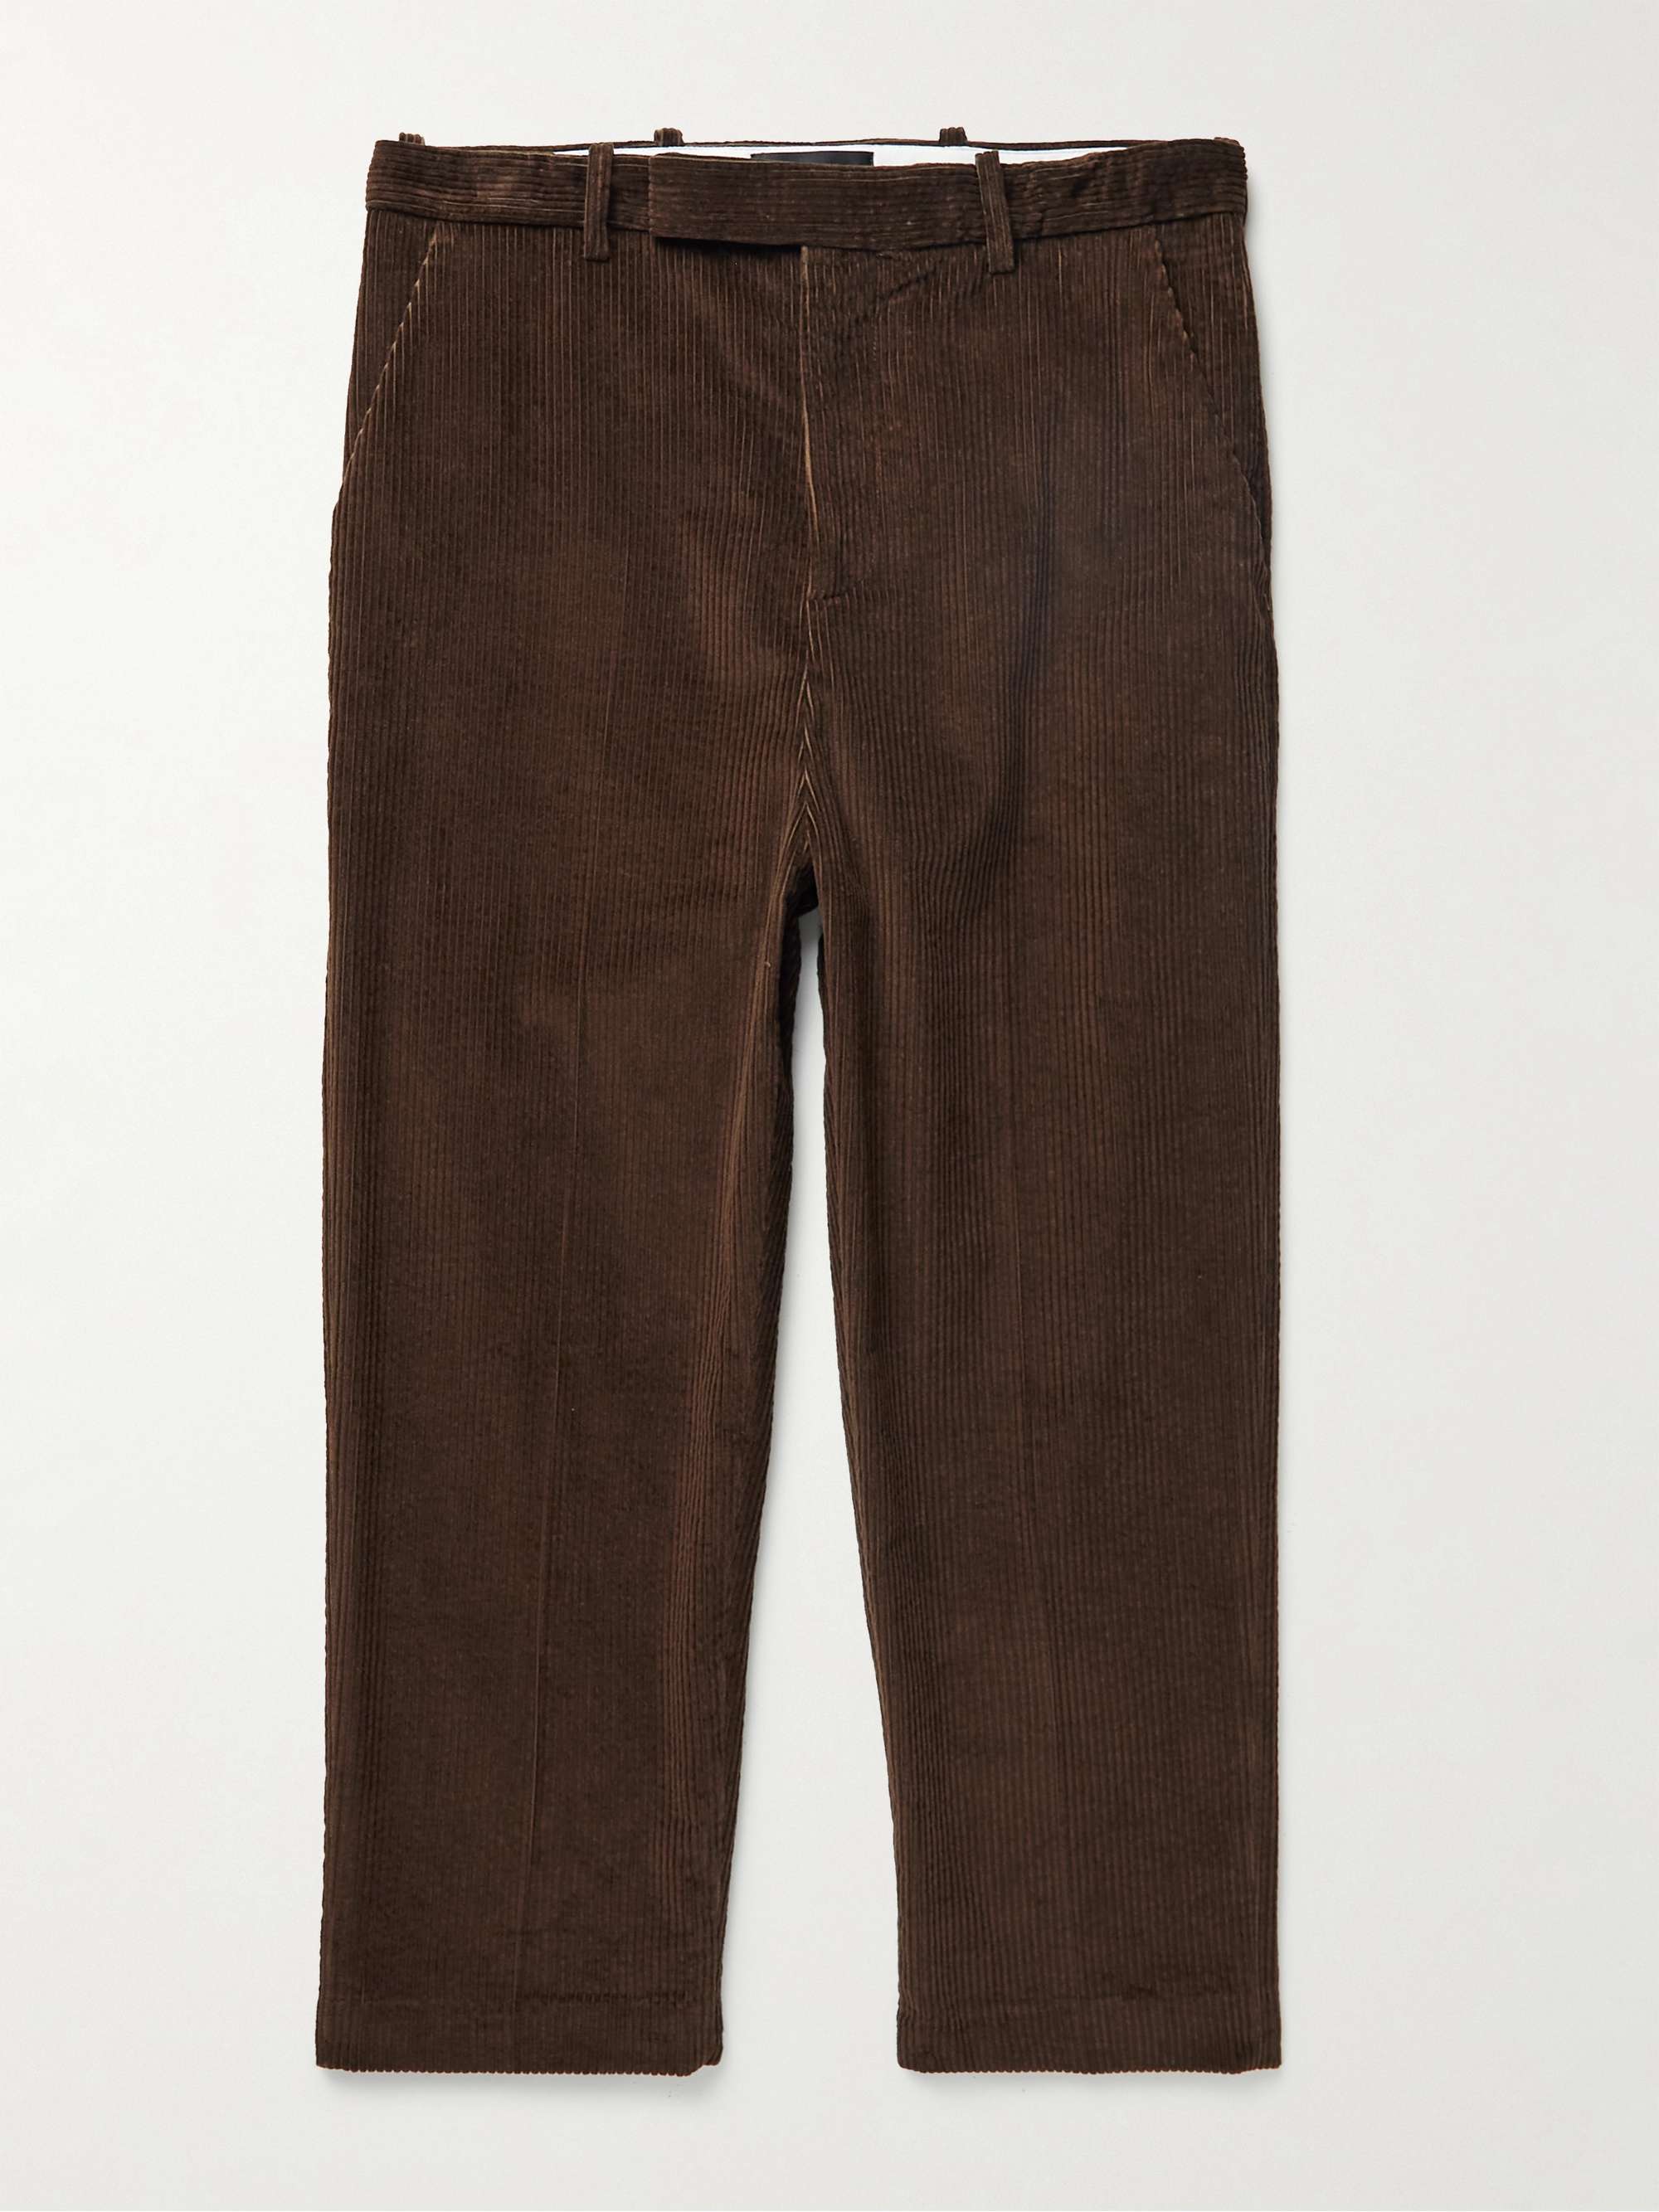 NILI LOTAN Cropped cotton-blend twill tapered pants